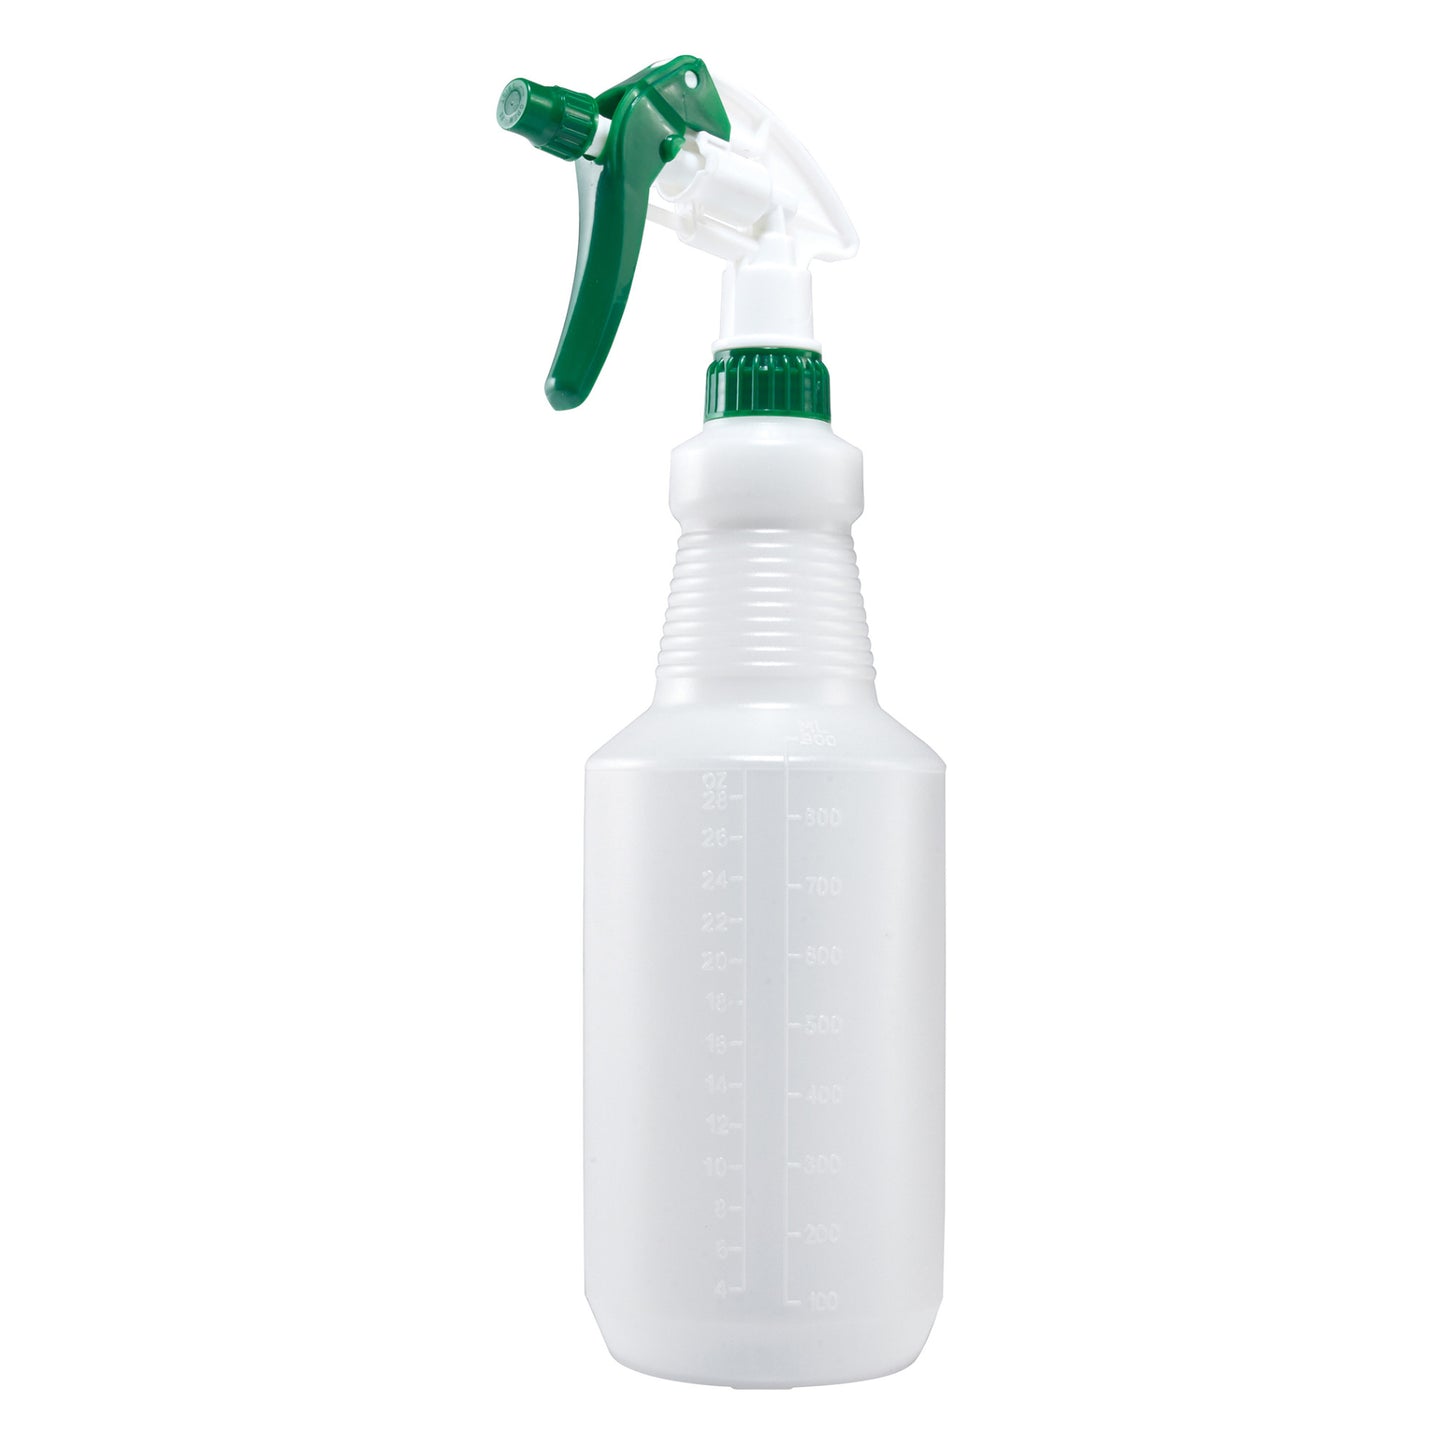 PSR-9 - 28oz Color-Coded Spray Bottle - Green